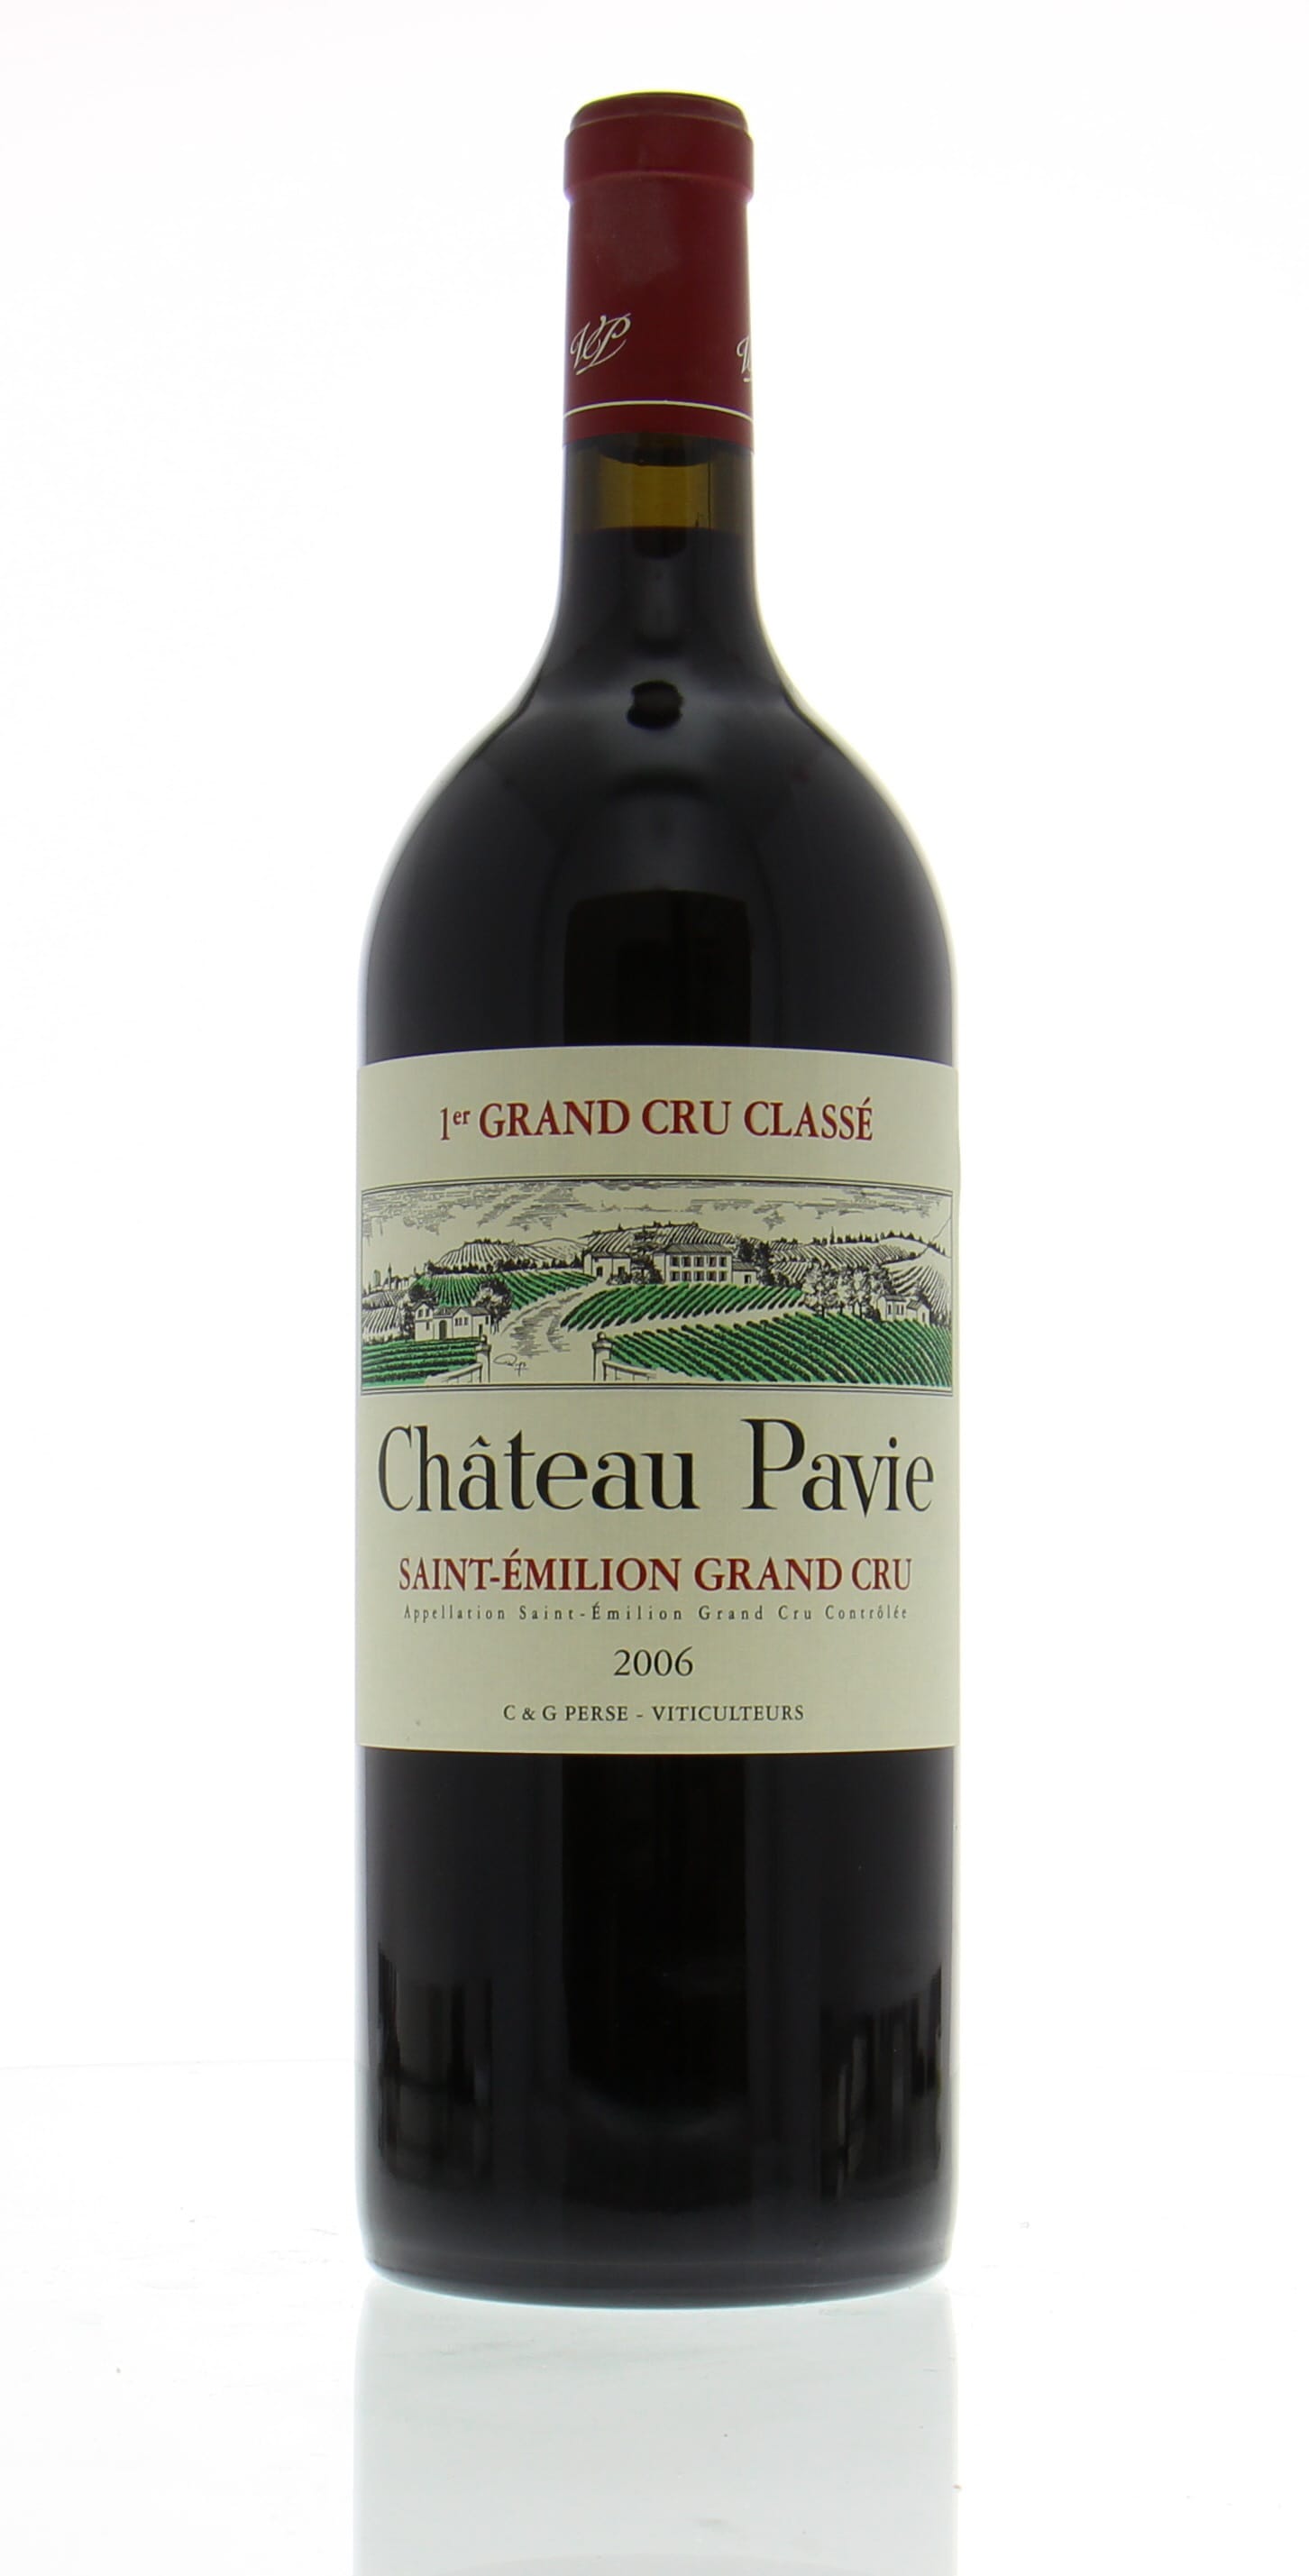 Chateau Cheval Blanc 2006 Grand Cru St. Emilion